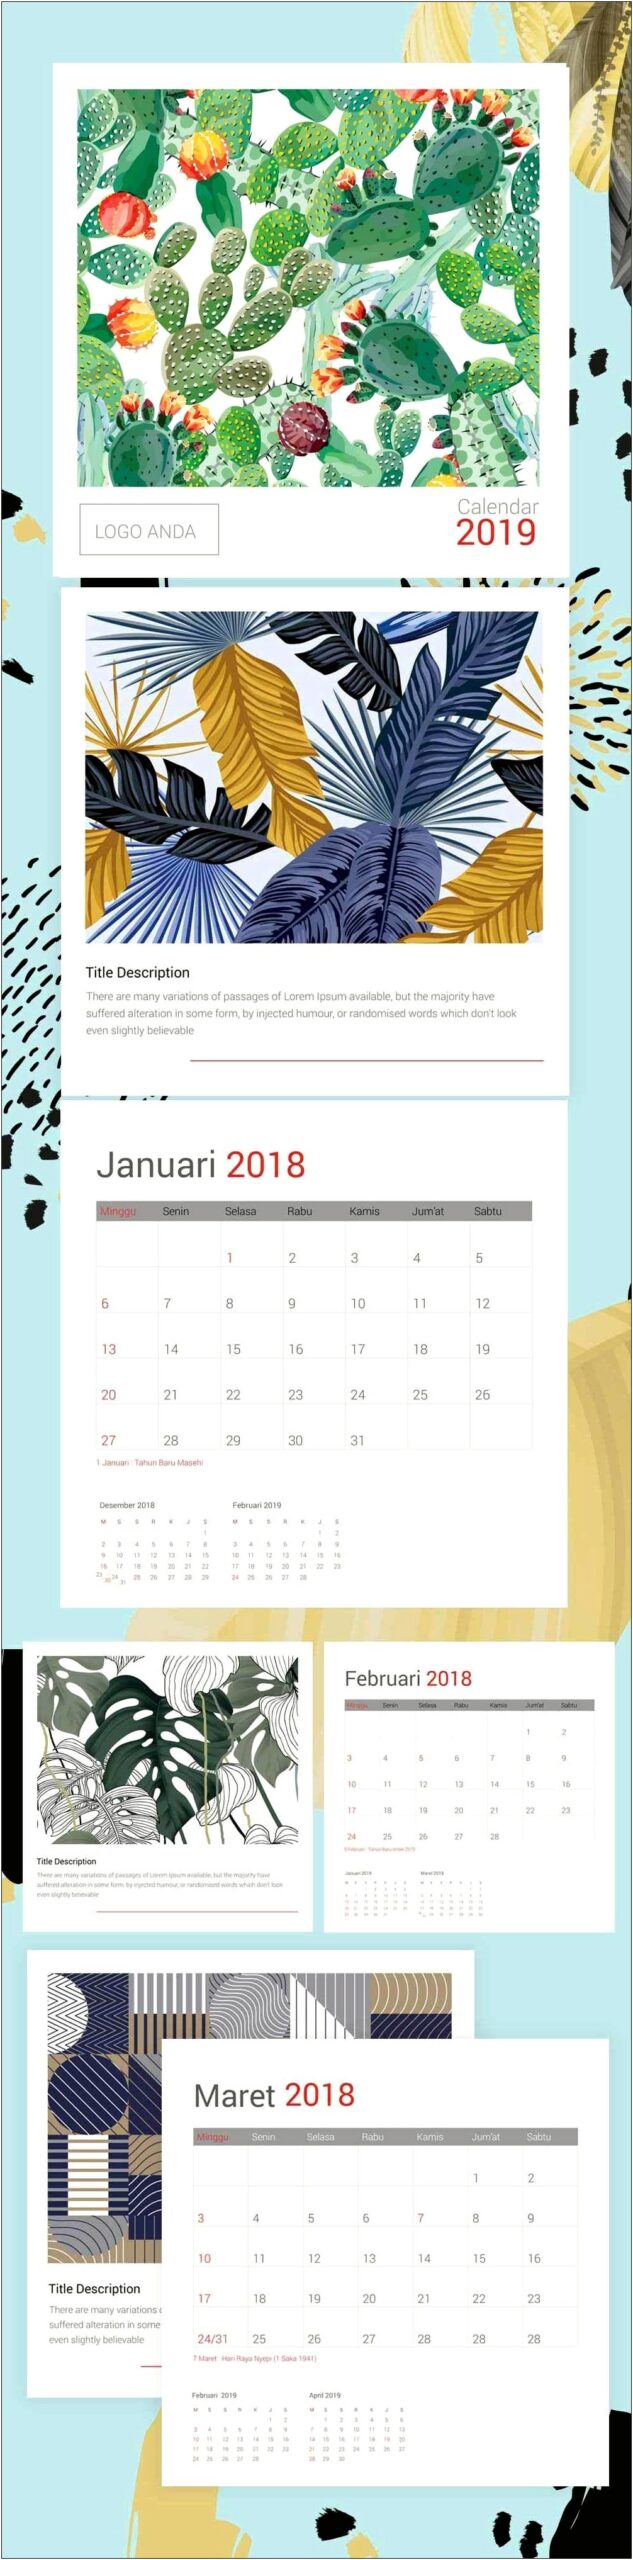 Adobe Illustrator Calendar Template 2019 Free